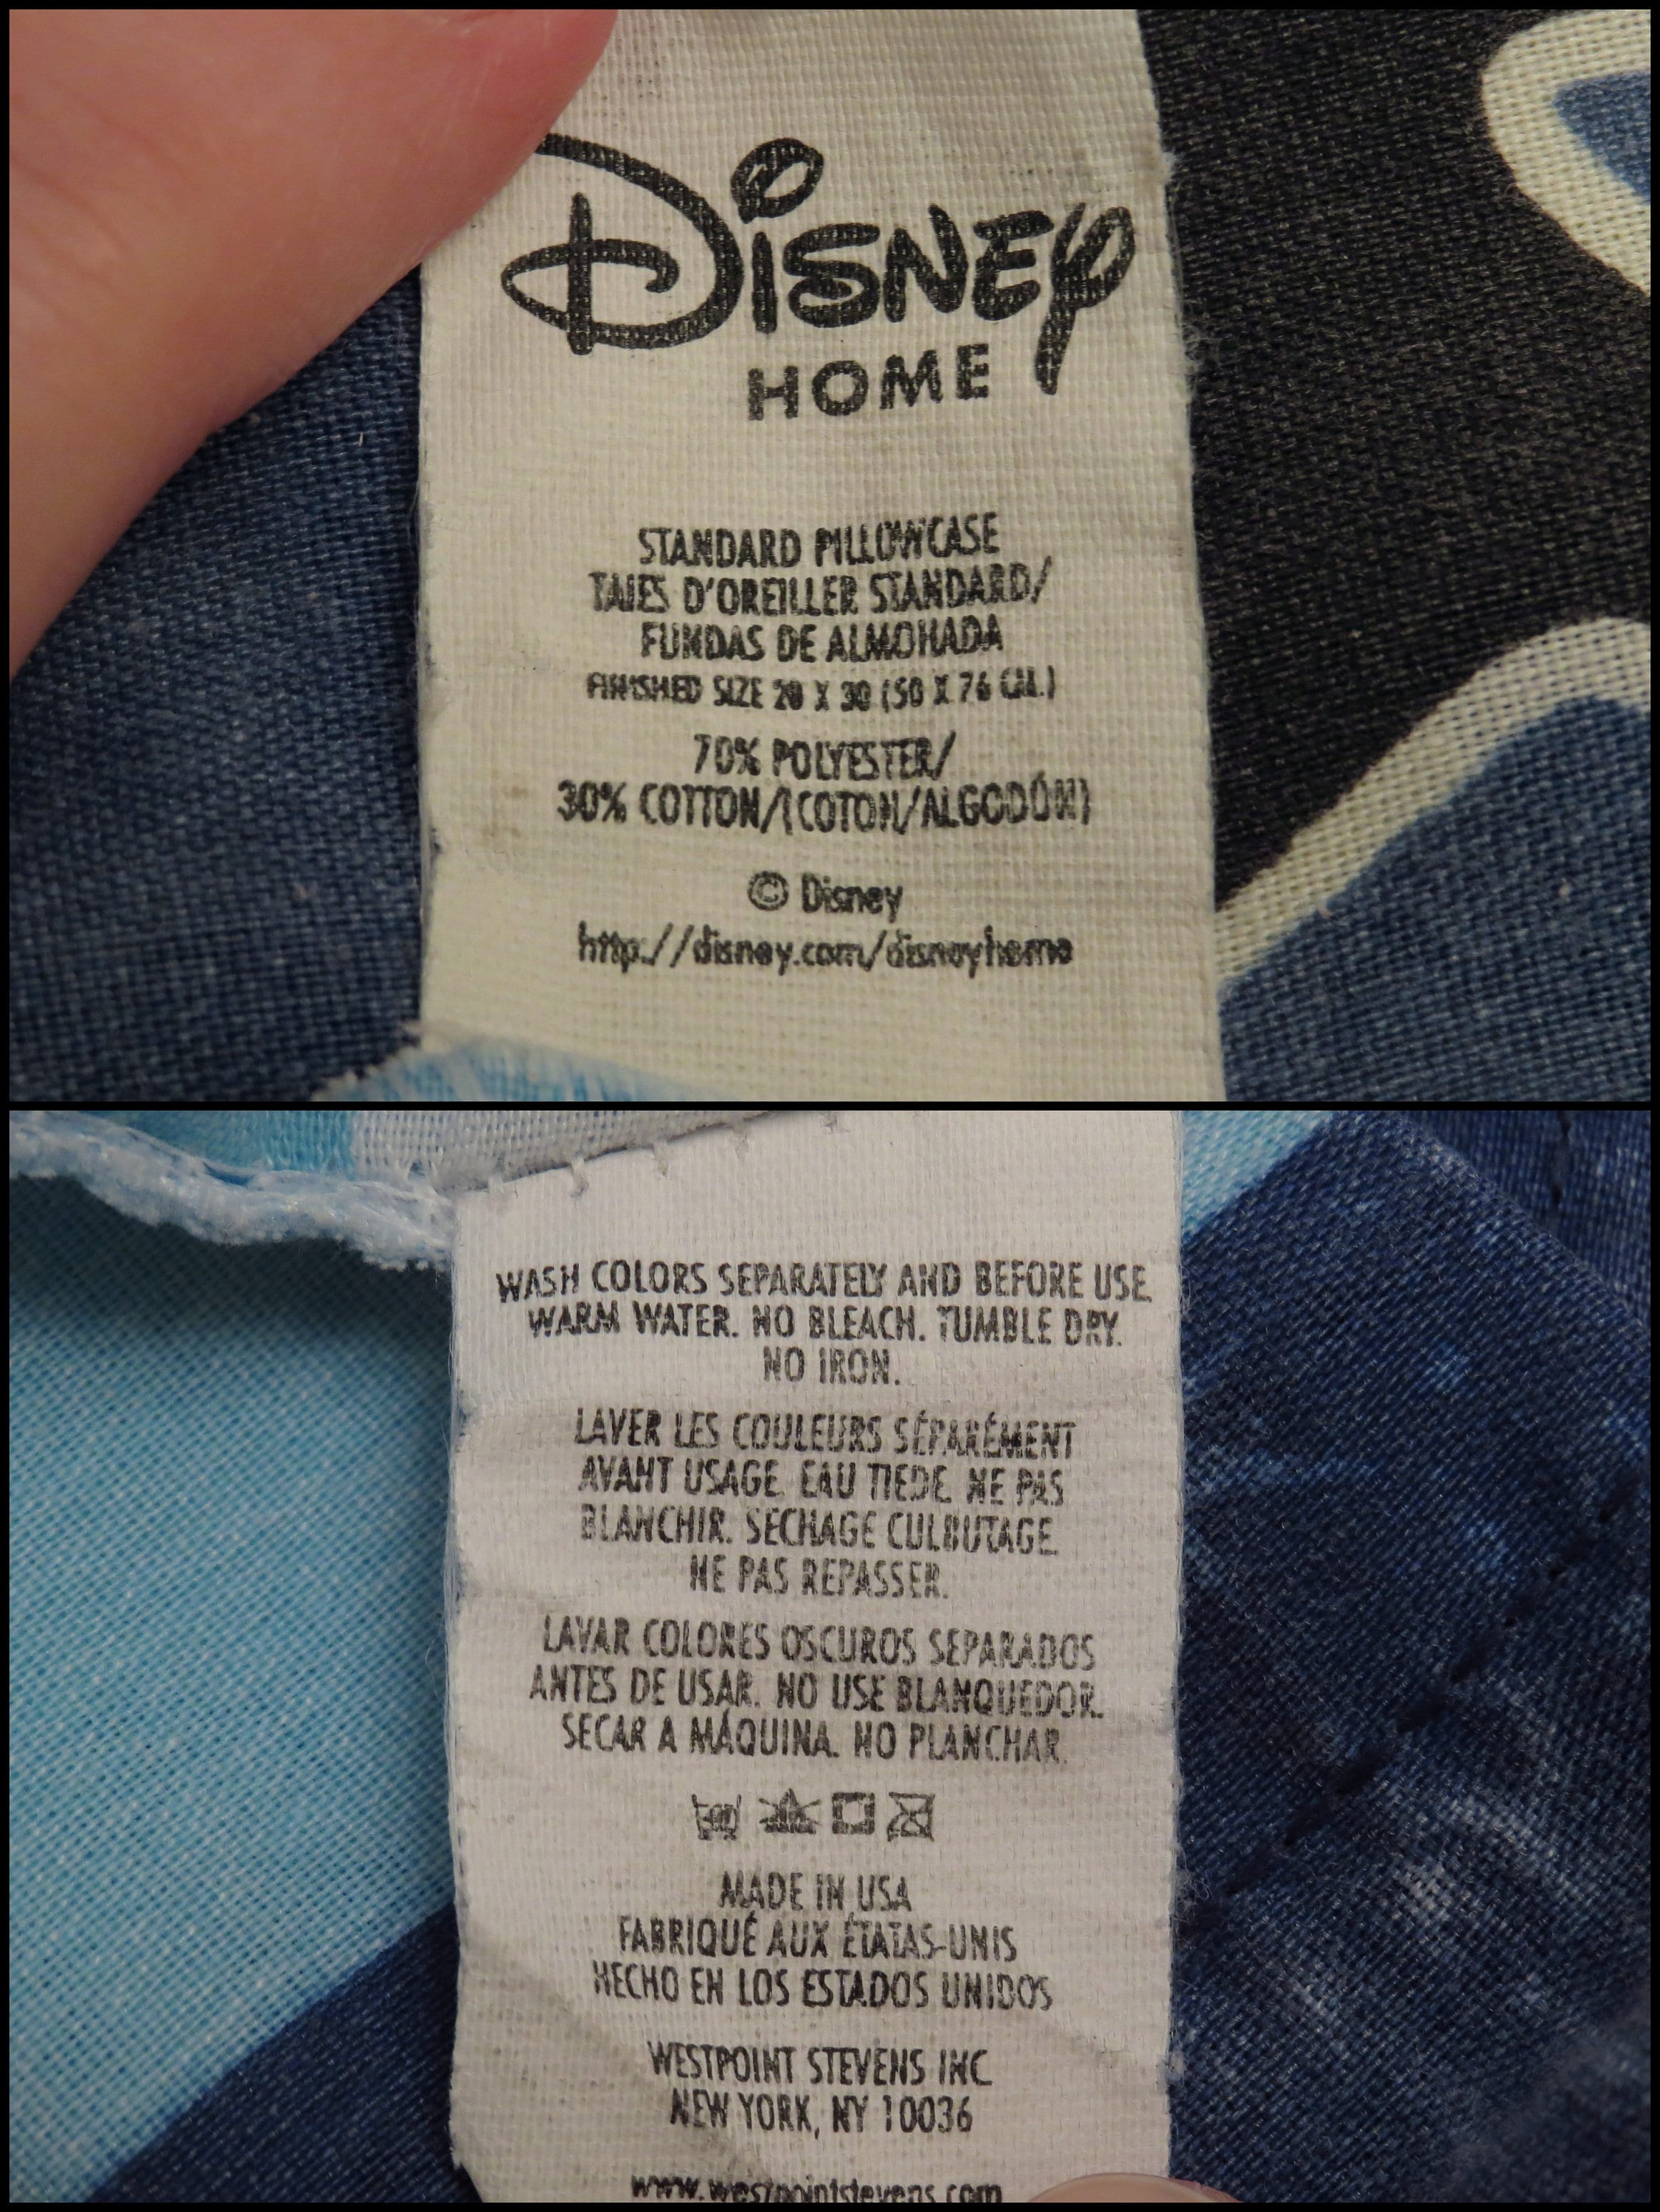 Vintage Buzz Lightyear standard pillowcase